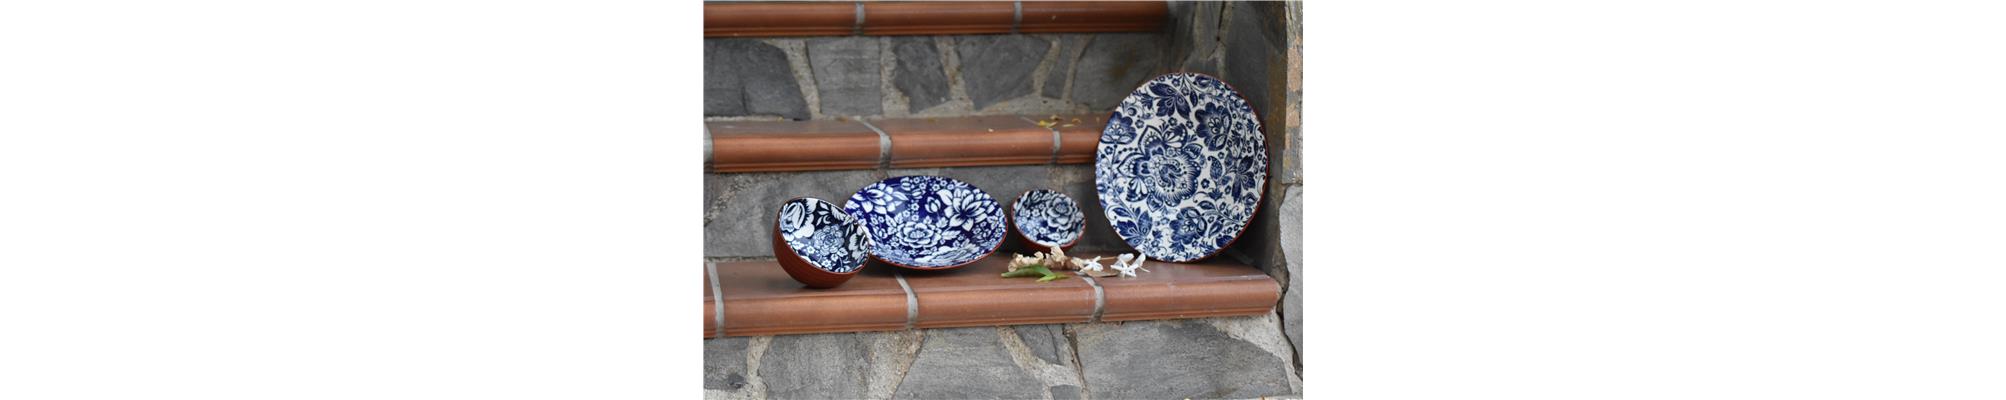 Platos decorados para vajilla de mesa